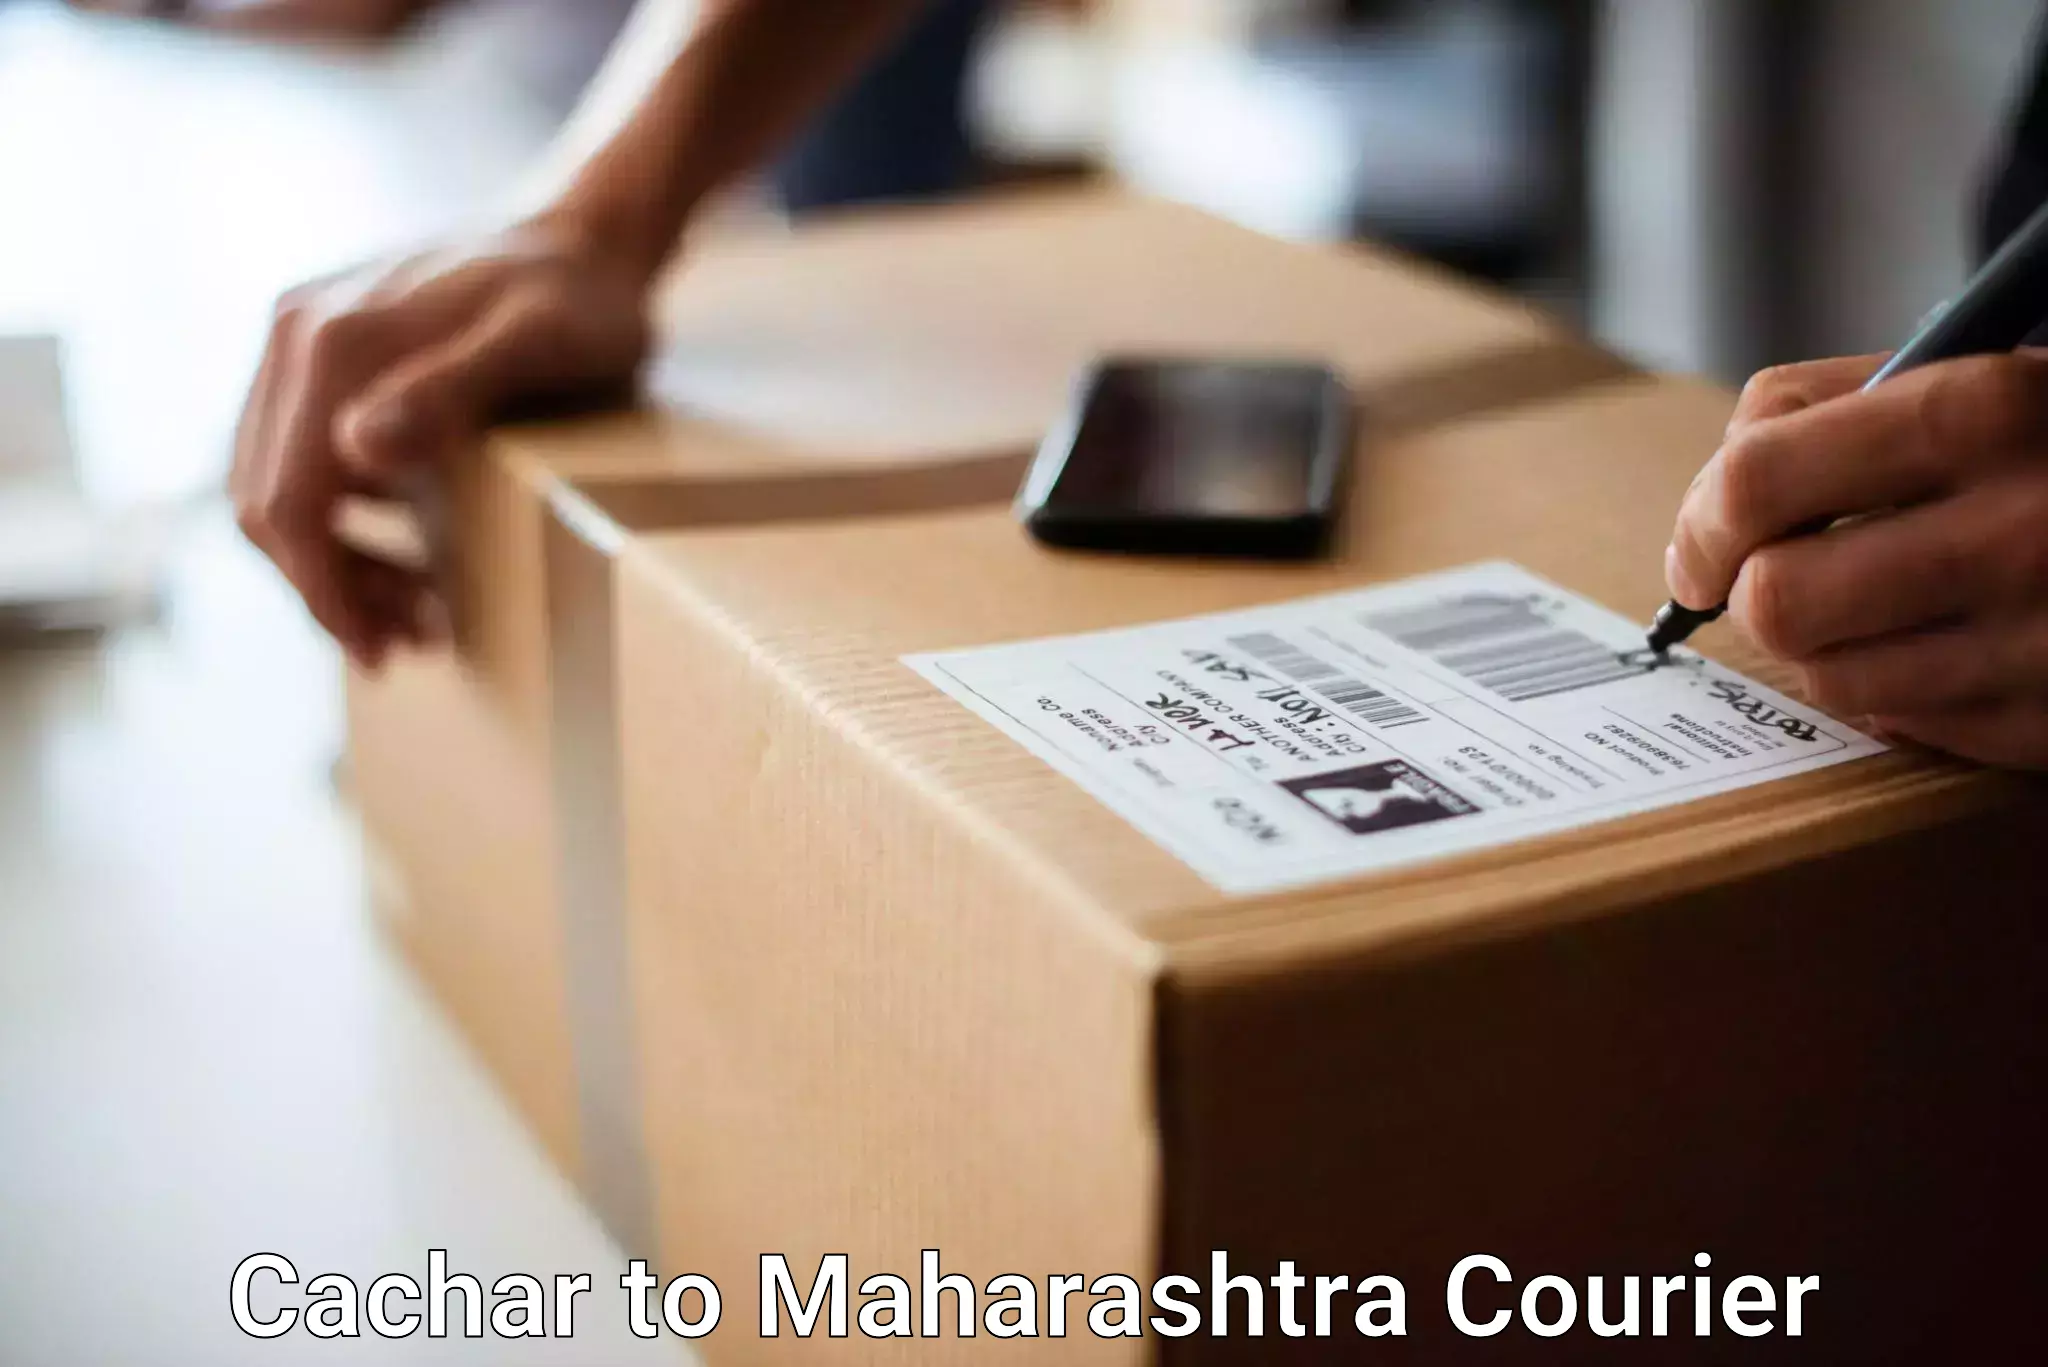 Luggage shipment tracking Cachar to Shivajinagar